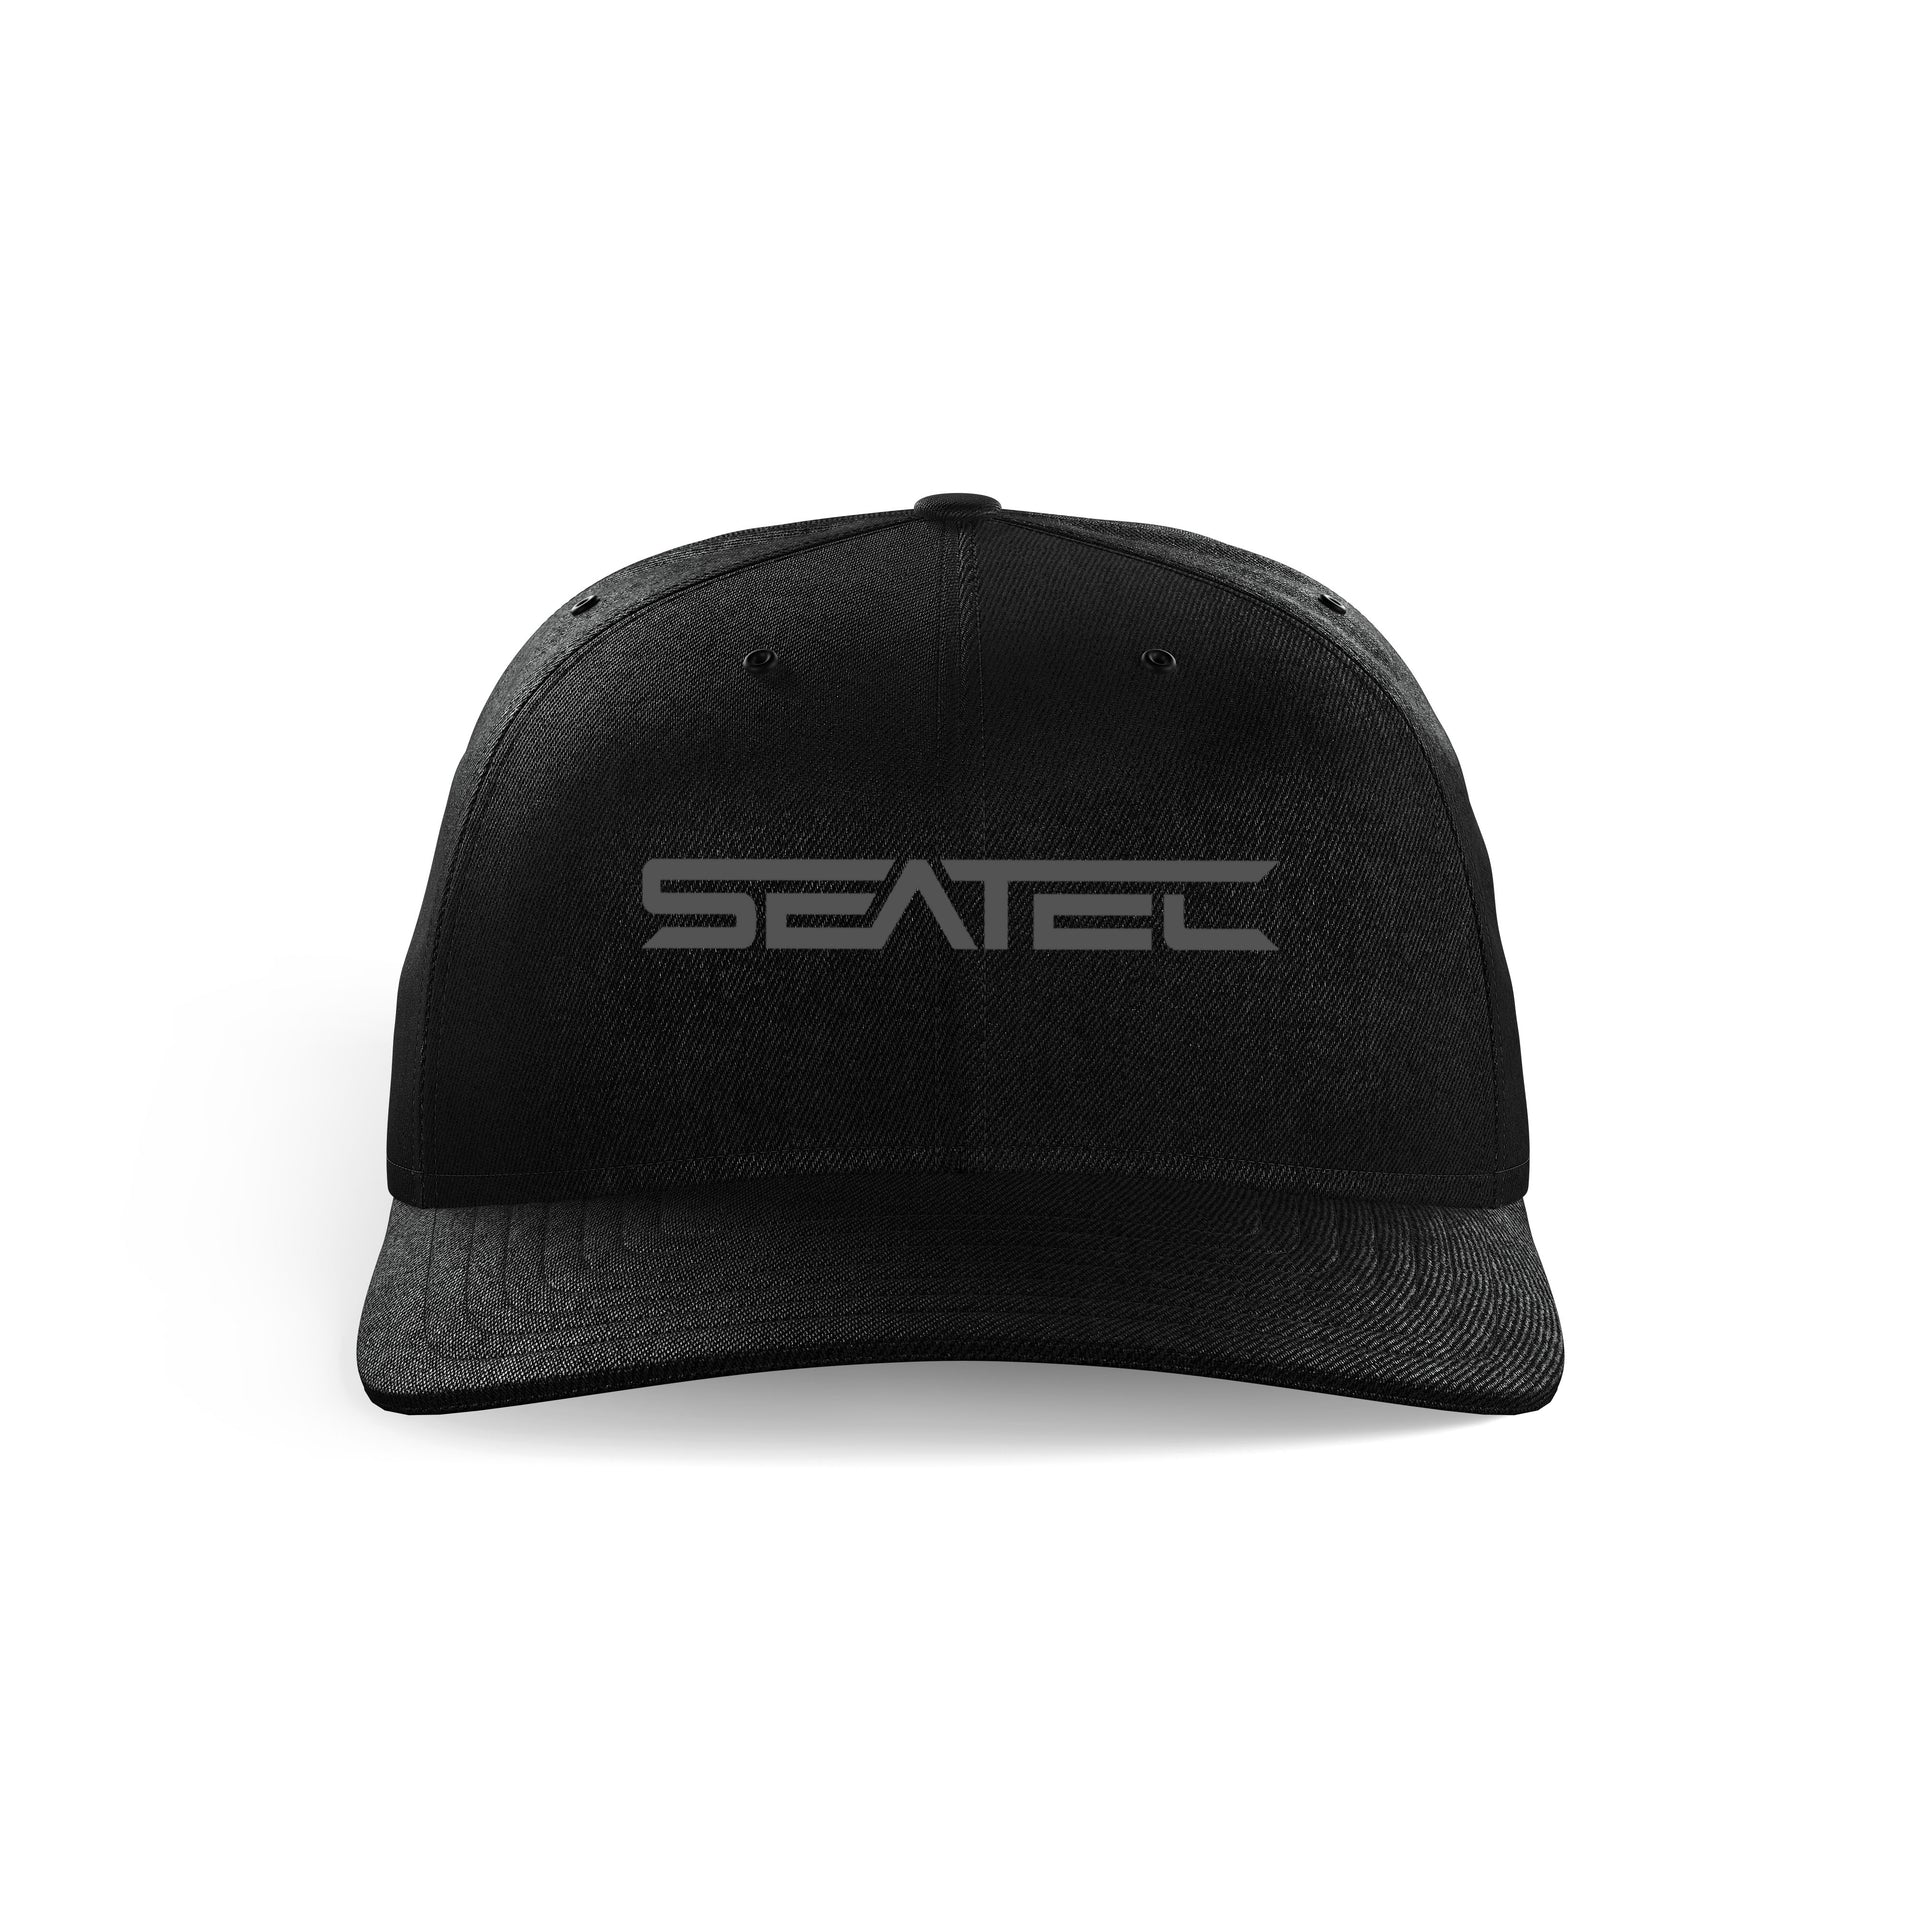 Seatec Outfitters Midnight, Mesh Back Snapback Cap, Tri Tec Performance Headwear - SPF 30+, Flex Performance Sweatband, Moisture Wicking